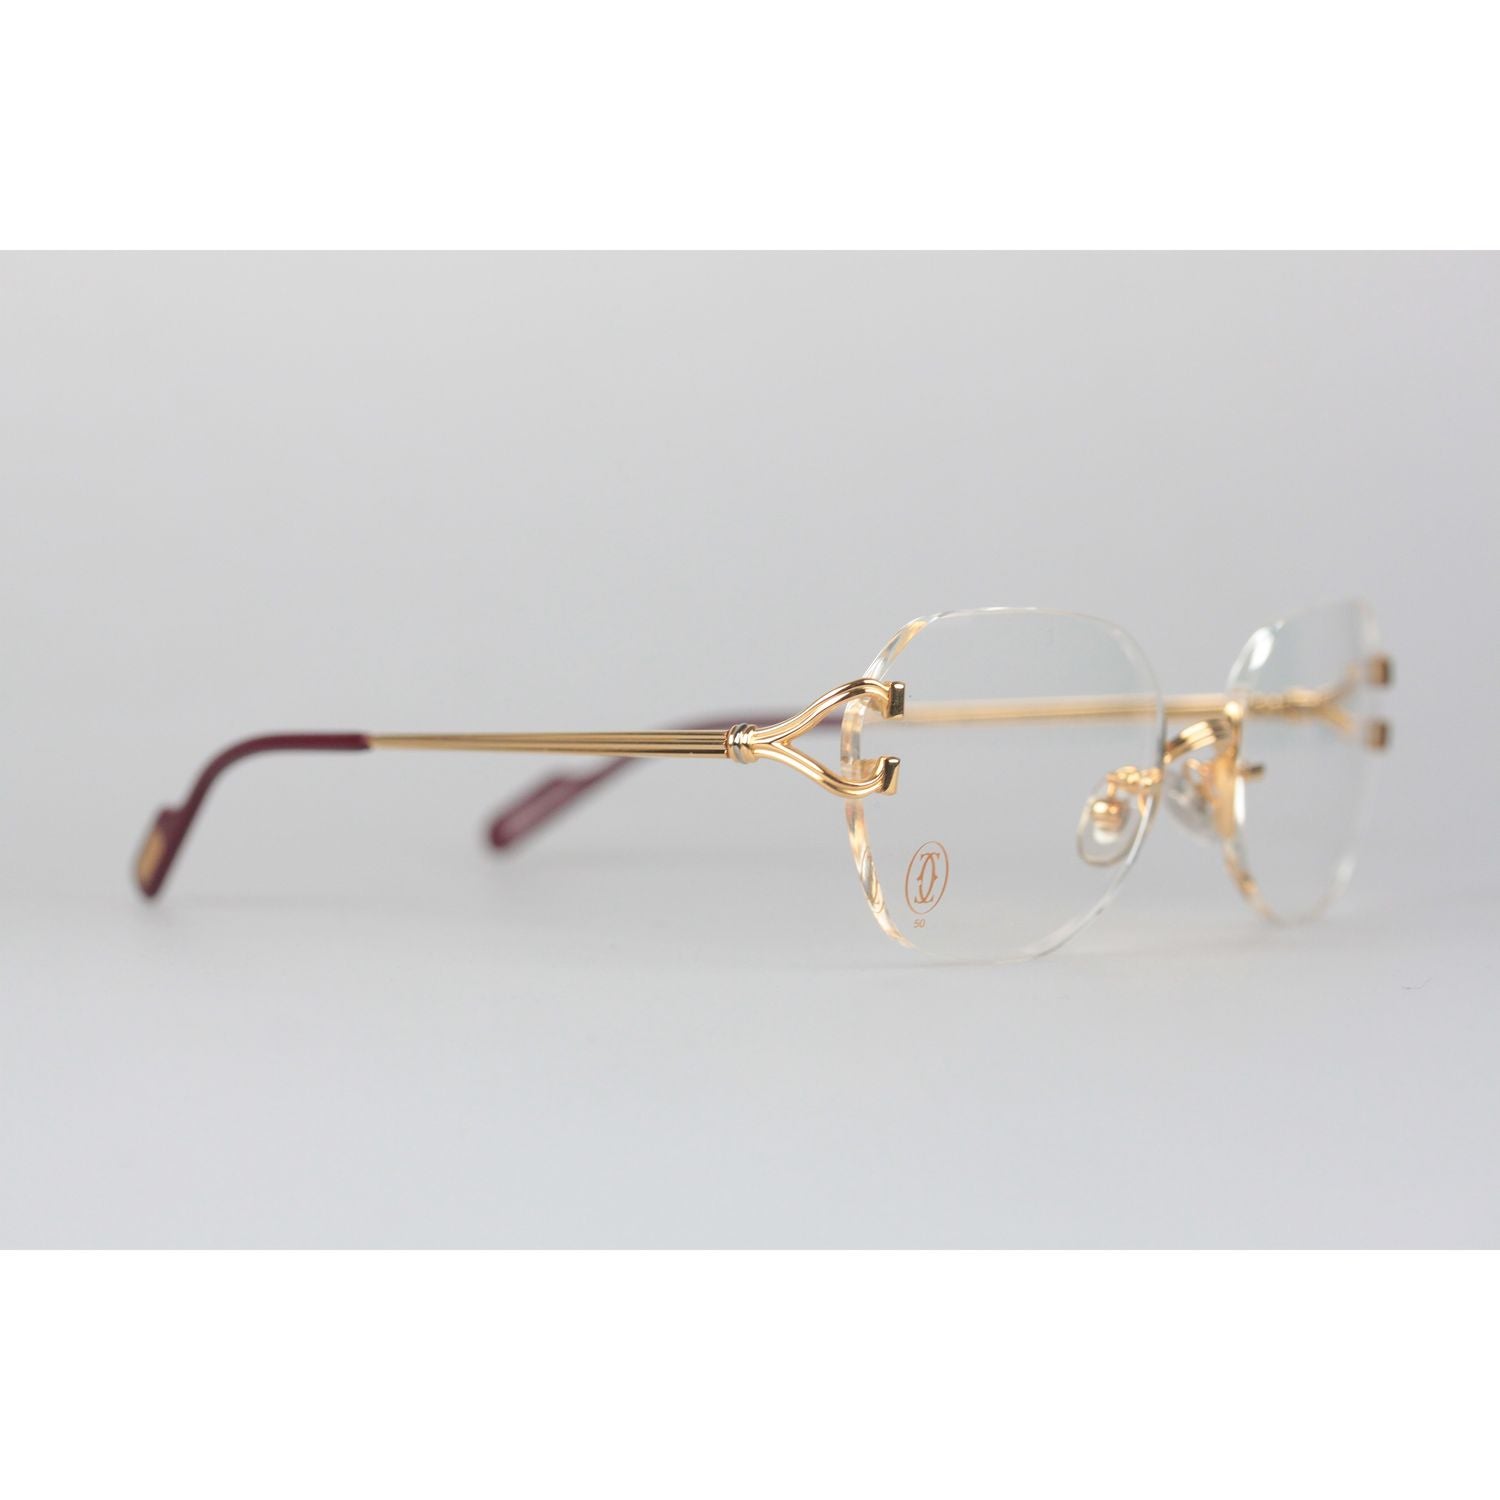 cartier glasses 130